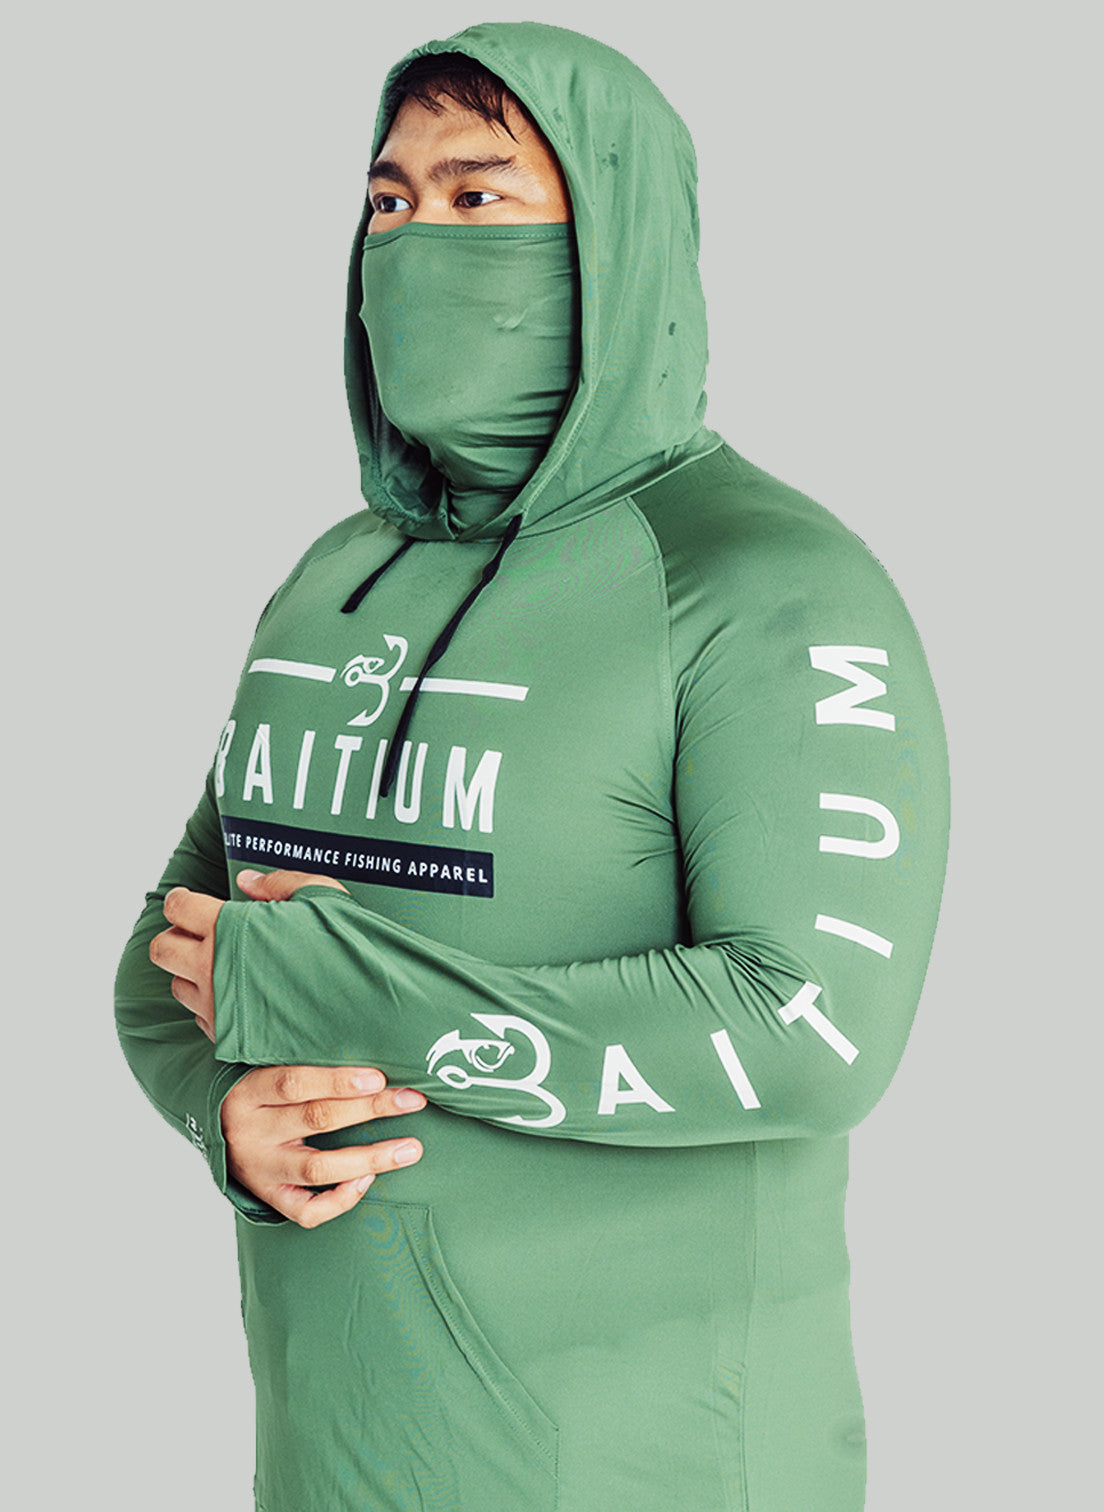 Baitium Original Hooded UPF 50+ PFG Long Sleeves Fishing Shirts Green / XX-Large